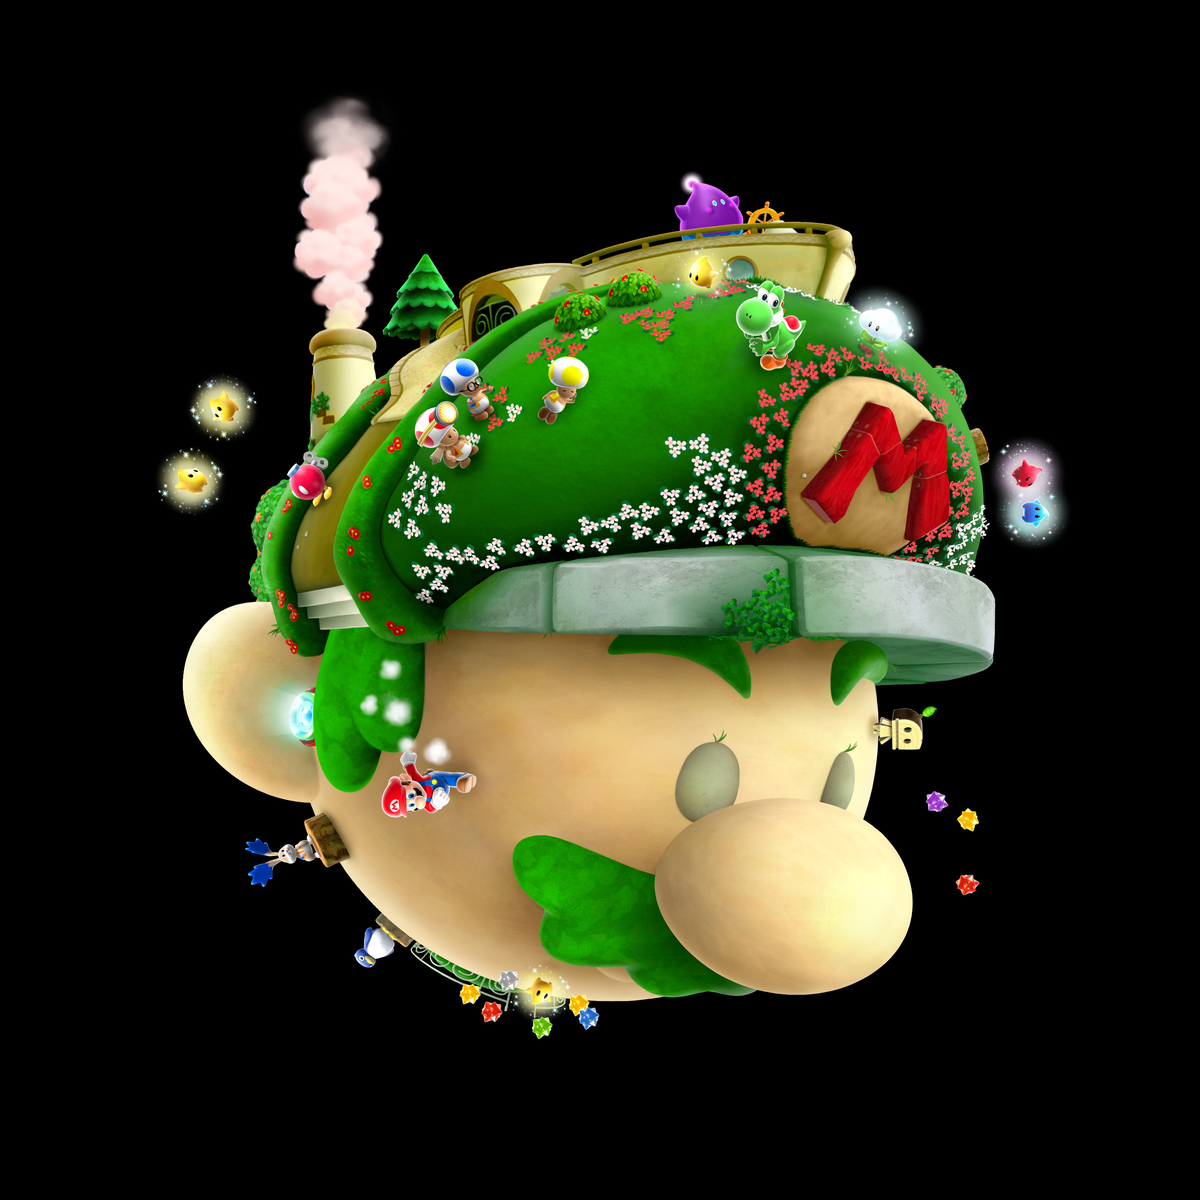 World 3 (Super Mario Galaxy 2) - Super Mario Wiki, the Mario